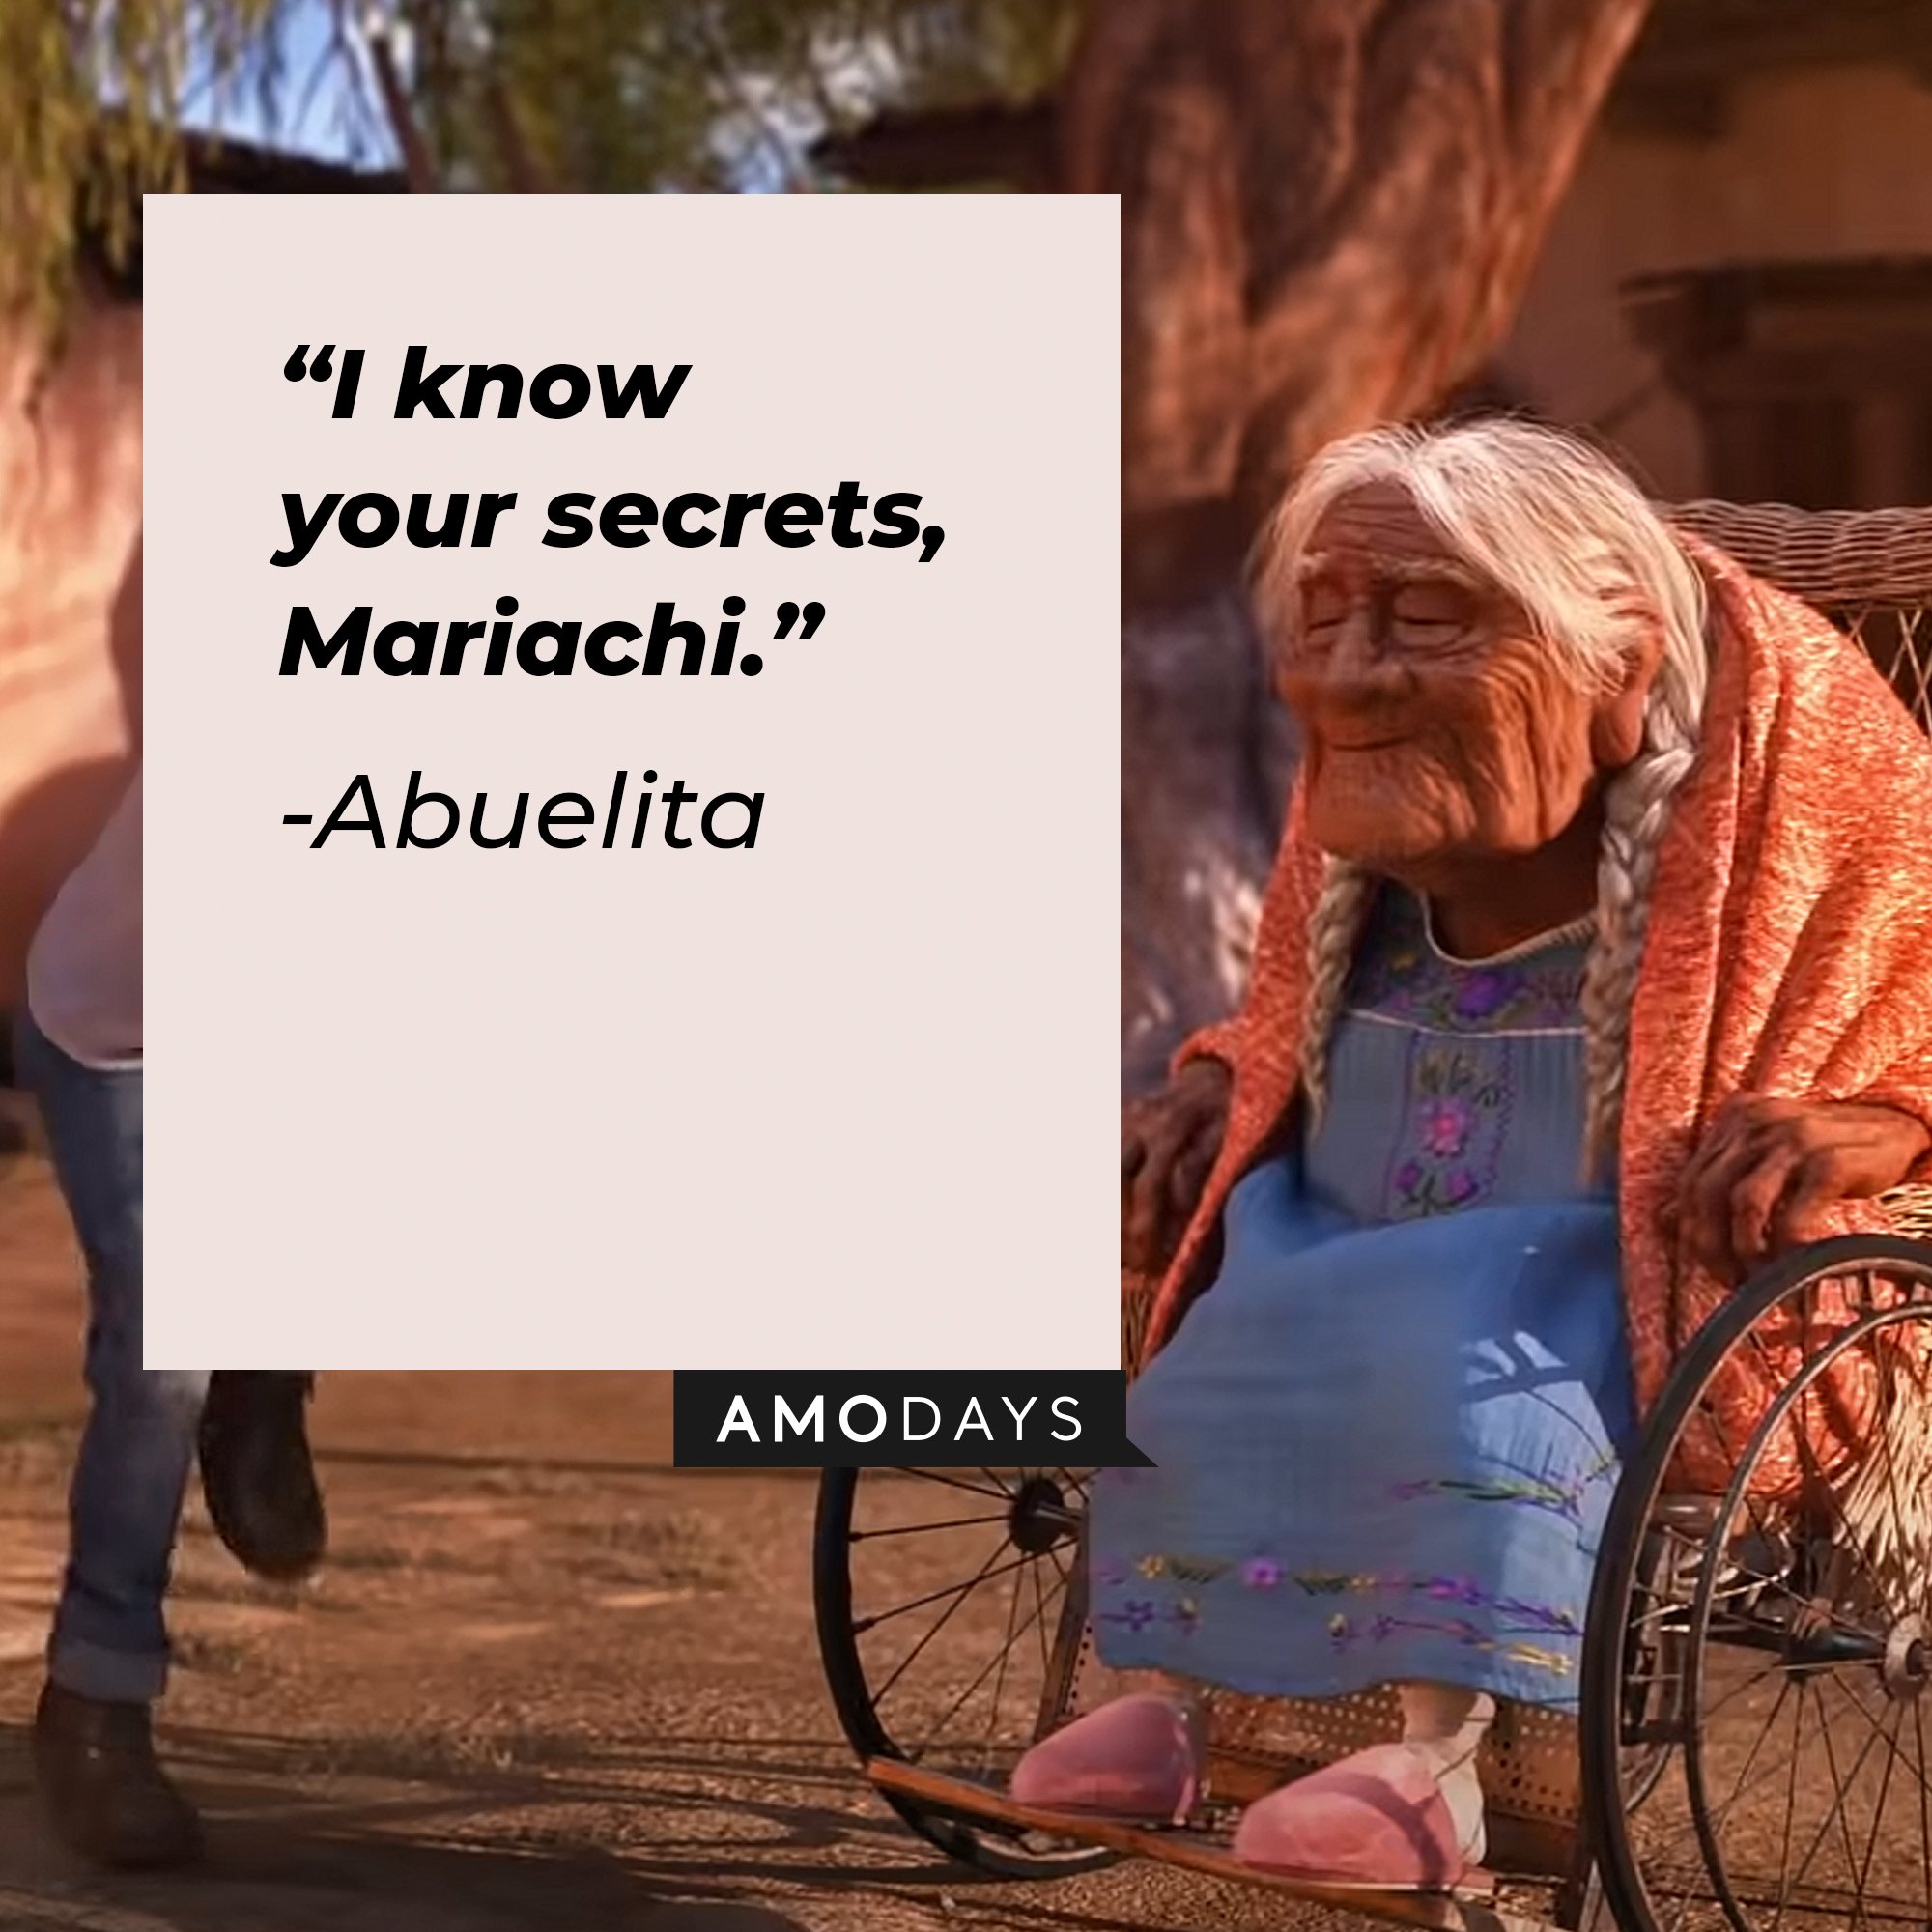 Abuelita's quote: “I know your secrets, Mariachi.” | Image: AmoDays